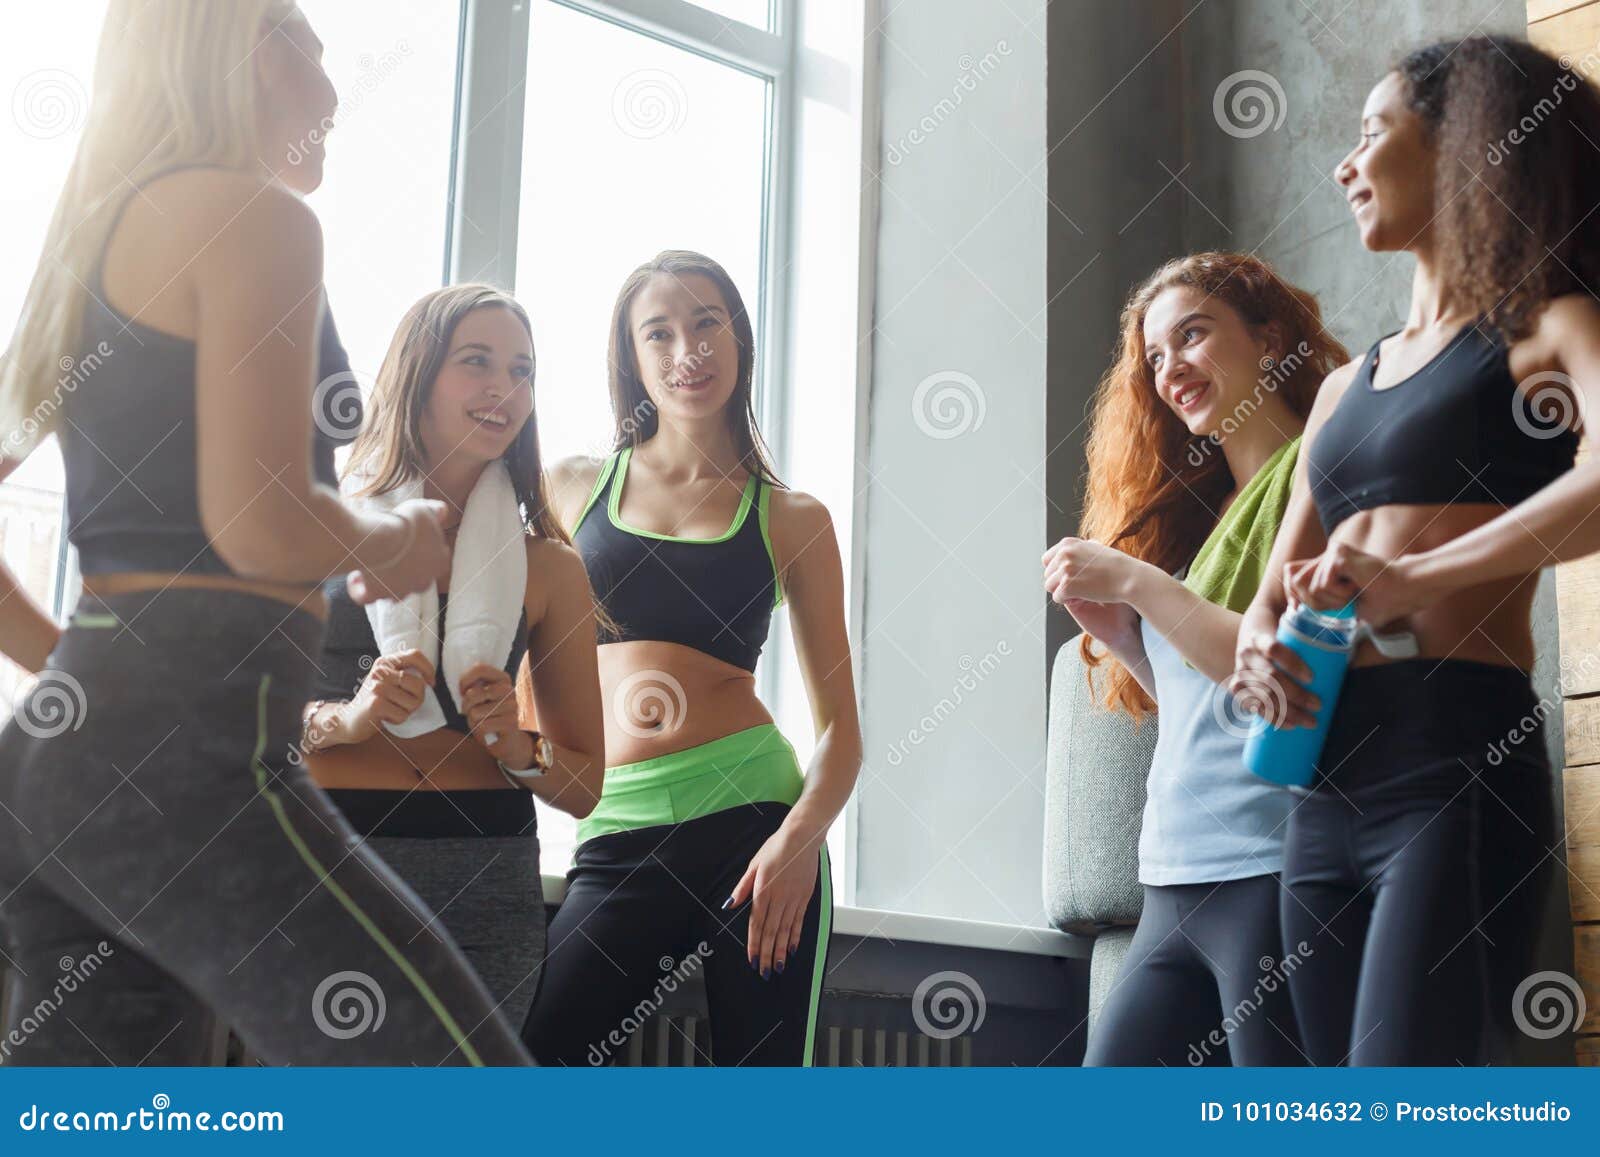 young girls in sportswear chatting before dancing class